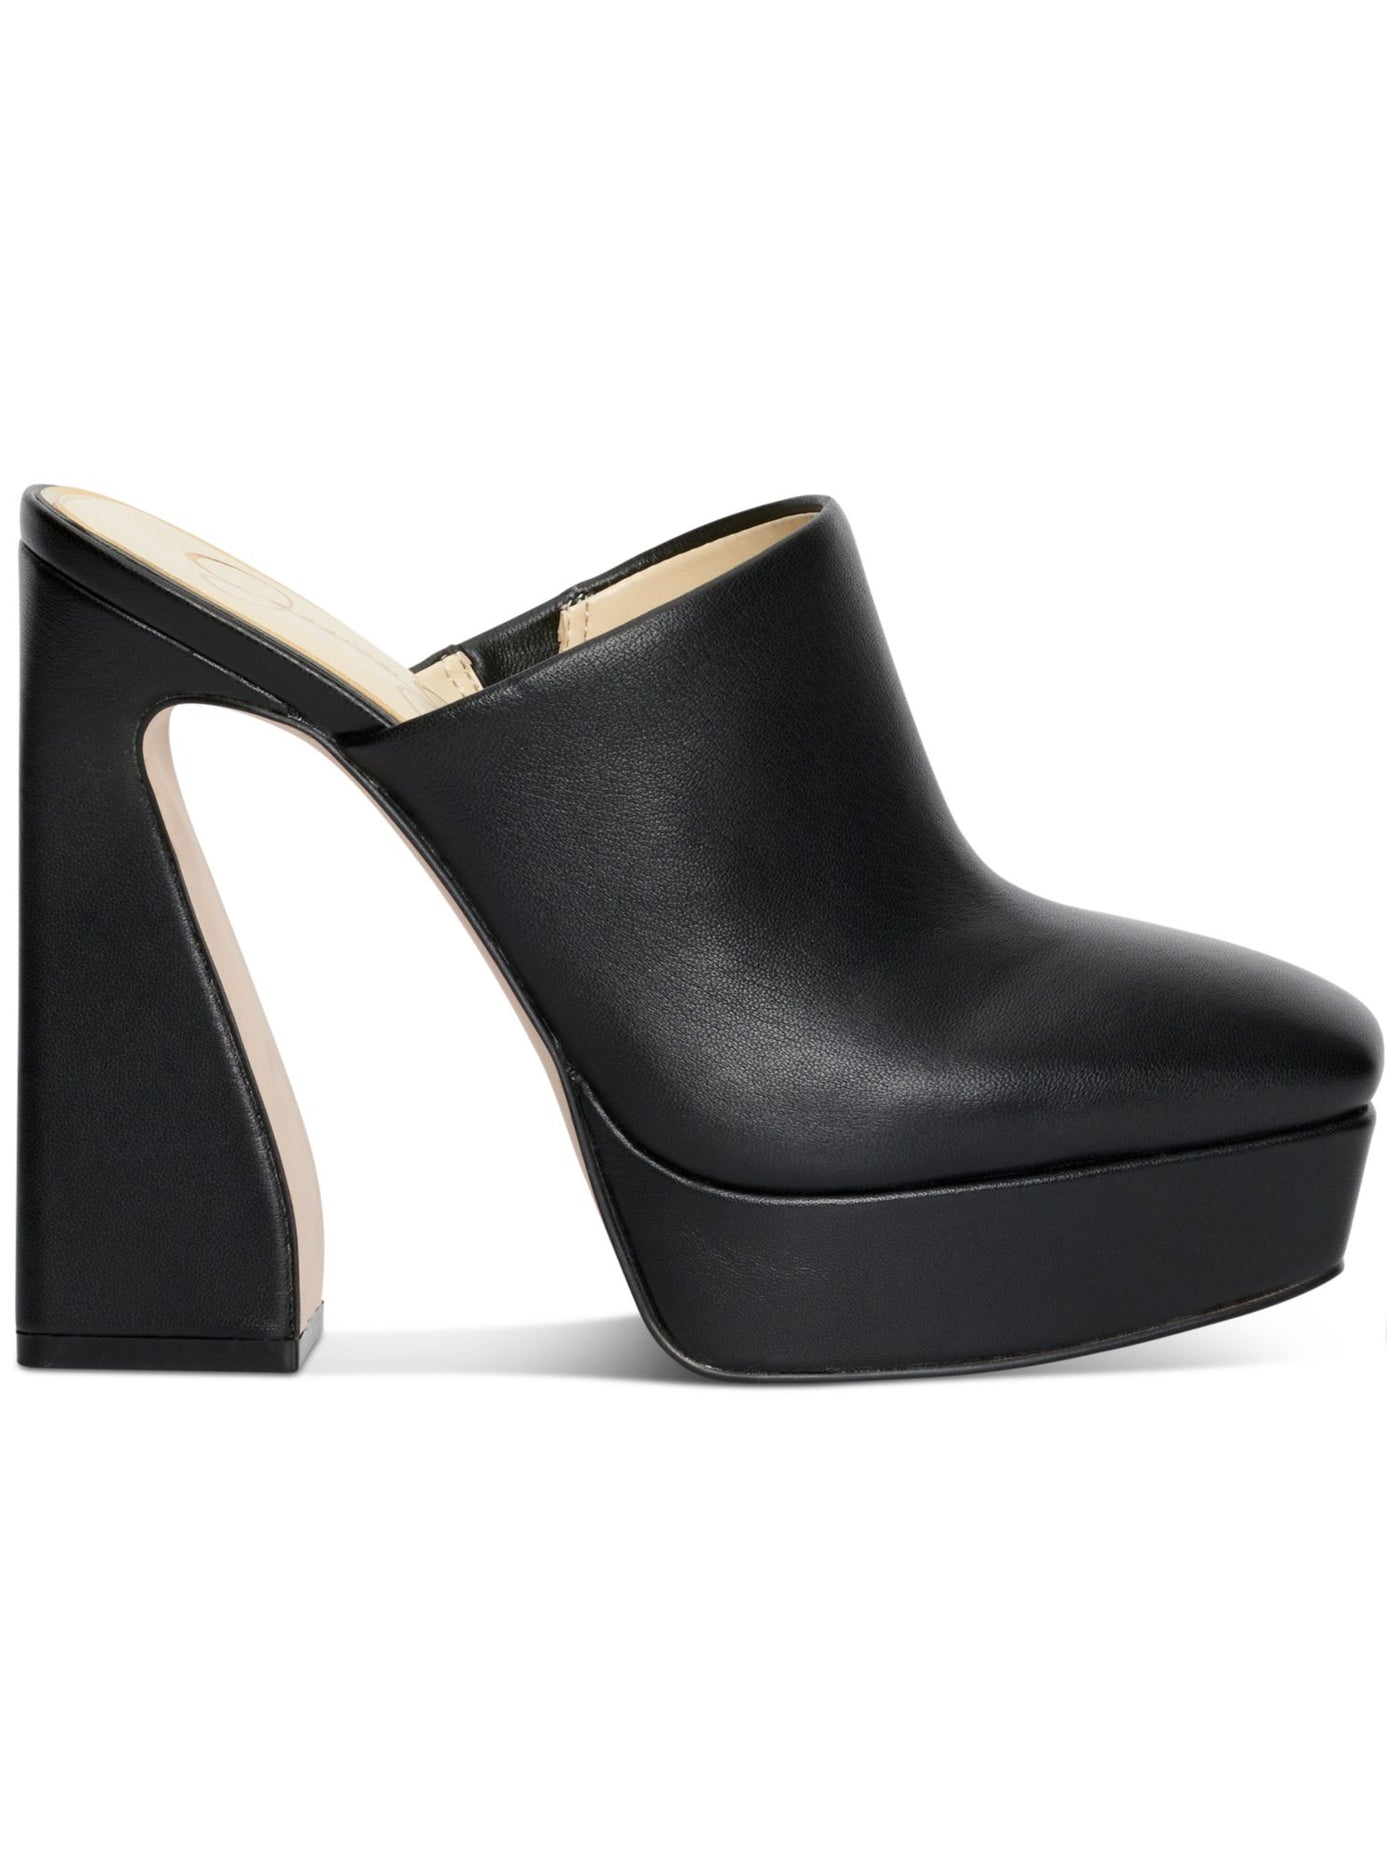 JESSICA SIMPSON Womens Black 1-1/2" Platform Denima Square Toe Slip On Leather Heeled Mules Shoes 10 M